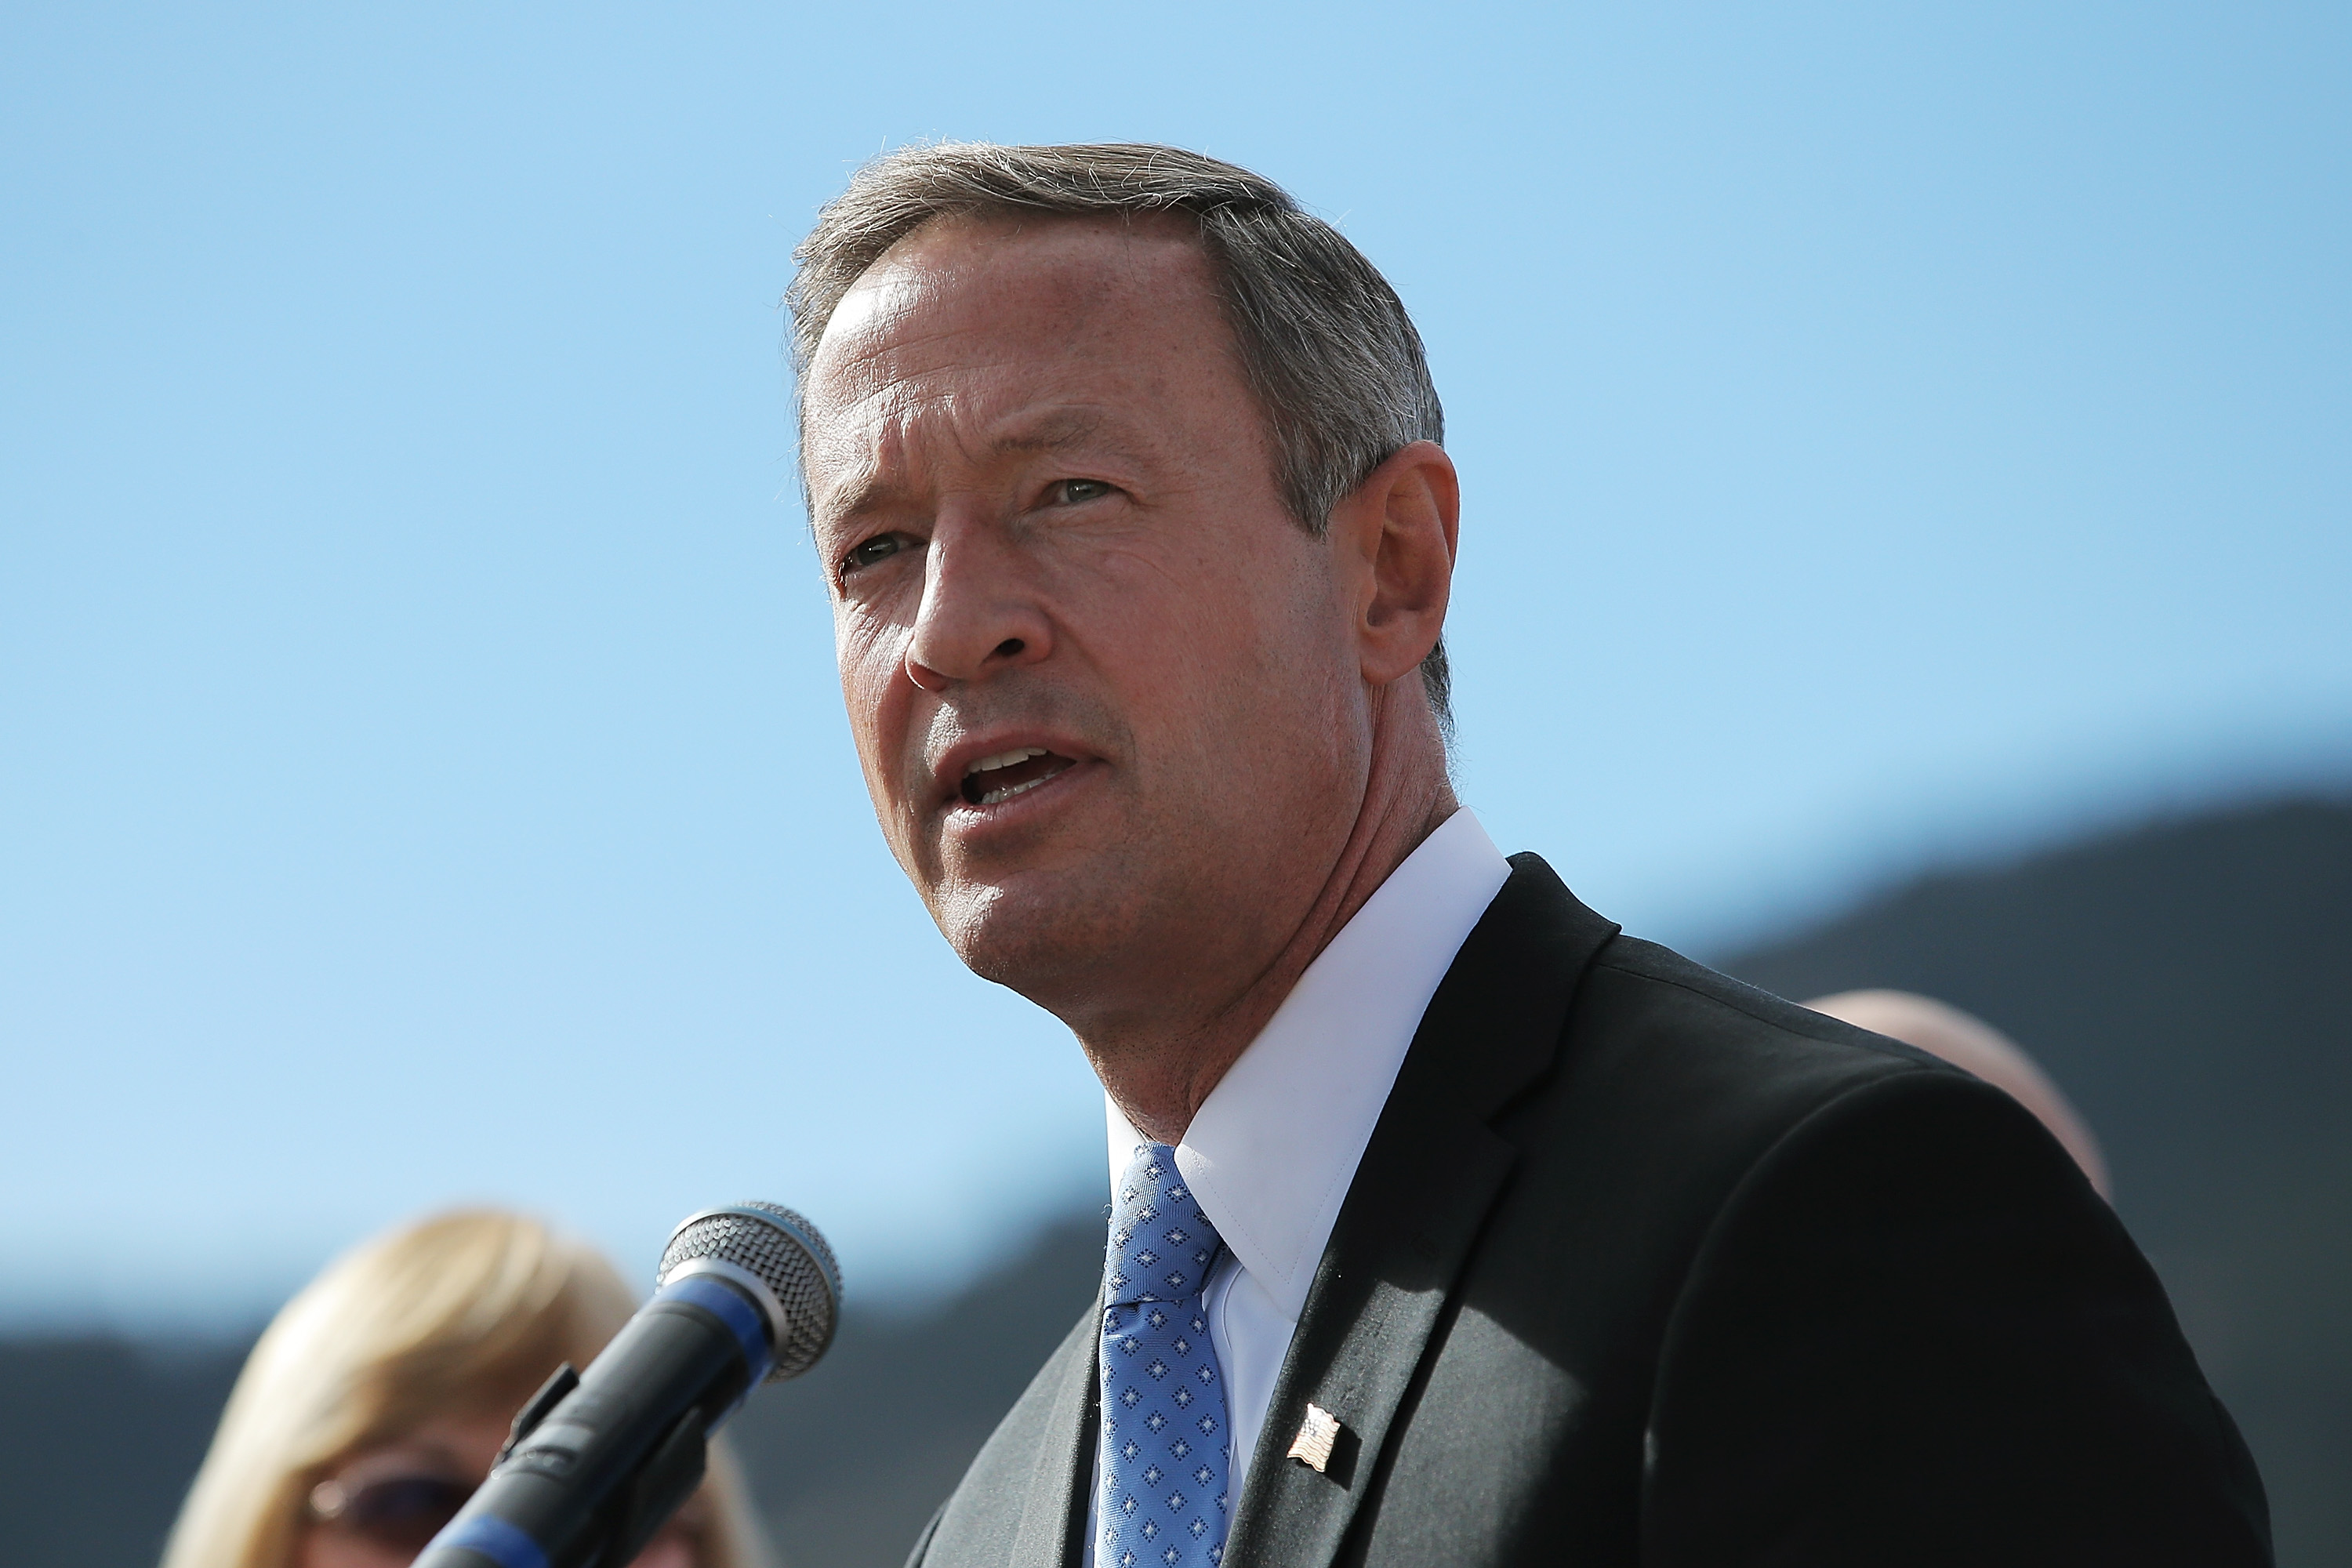 Democratic Presidential Candidate Martin O'Malley Calls For Gun Safety Reform